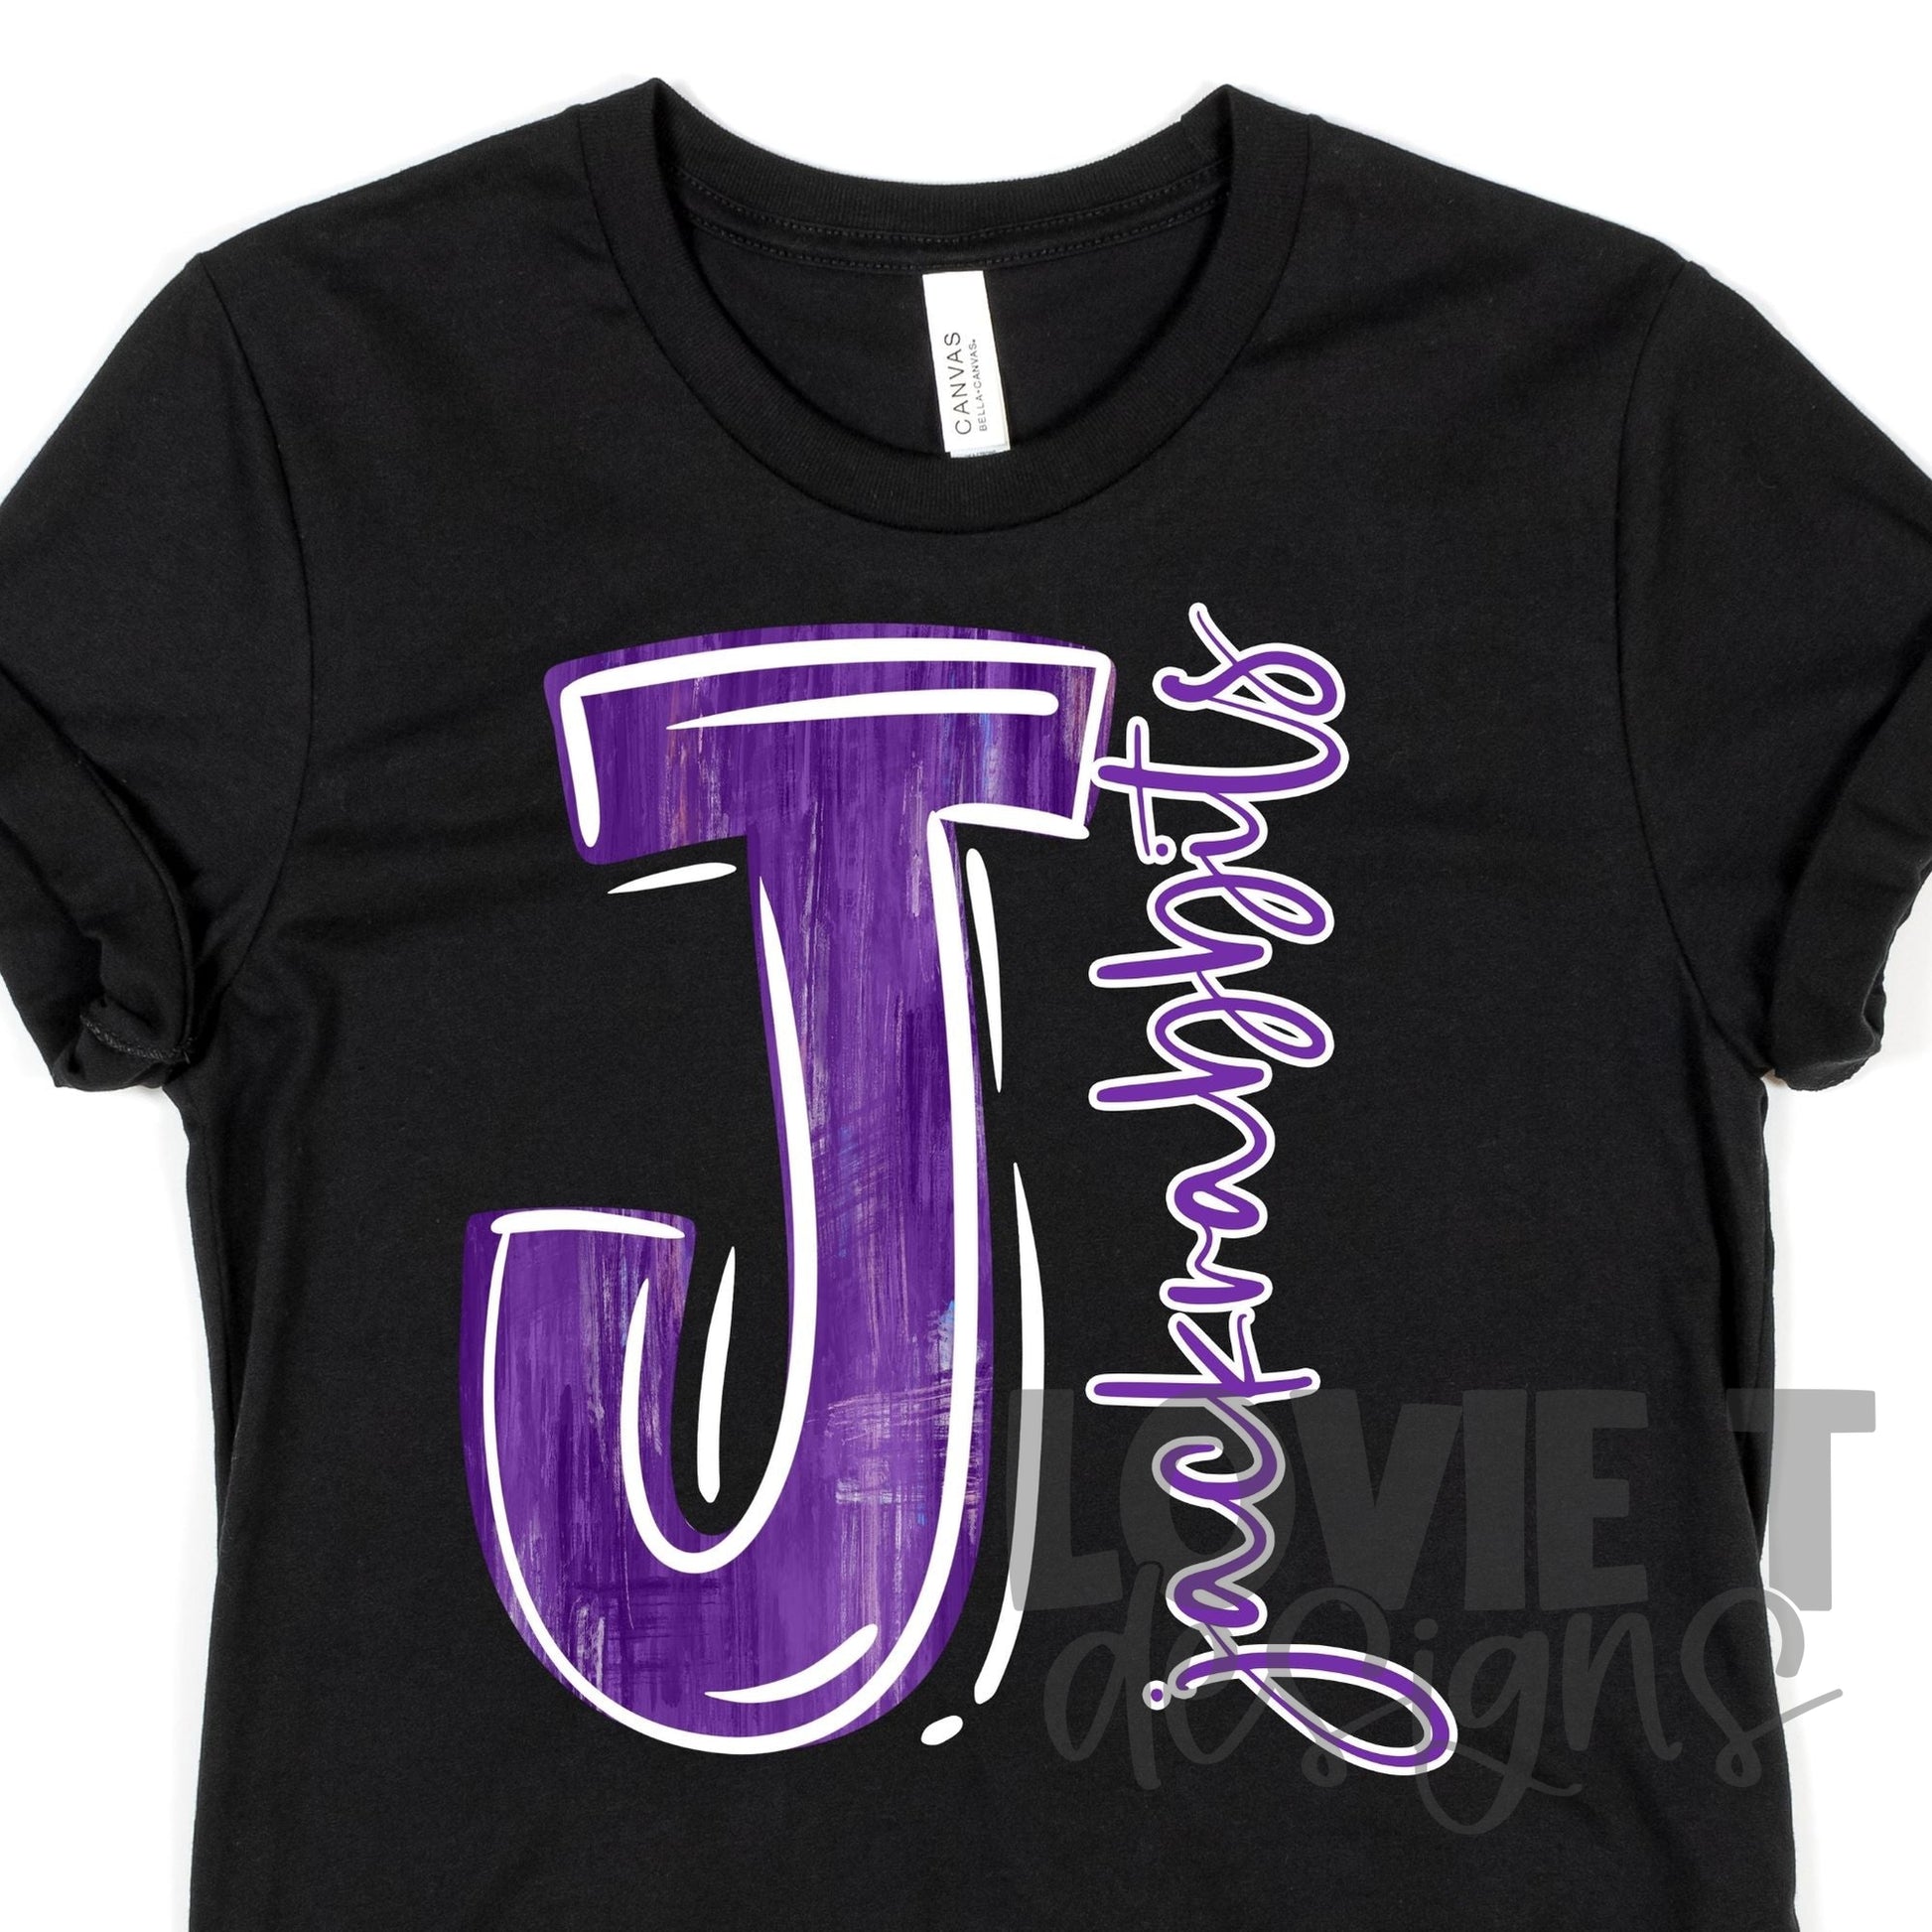 Jackrabbits Purple-Lovie T Designs